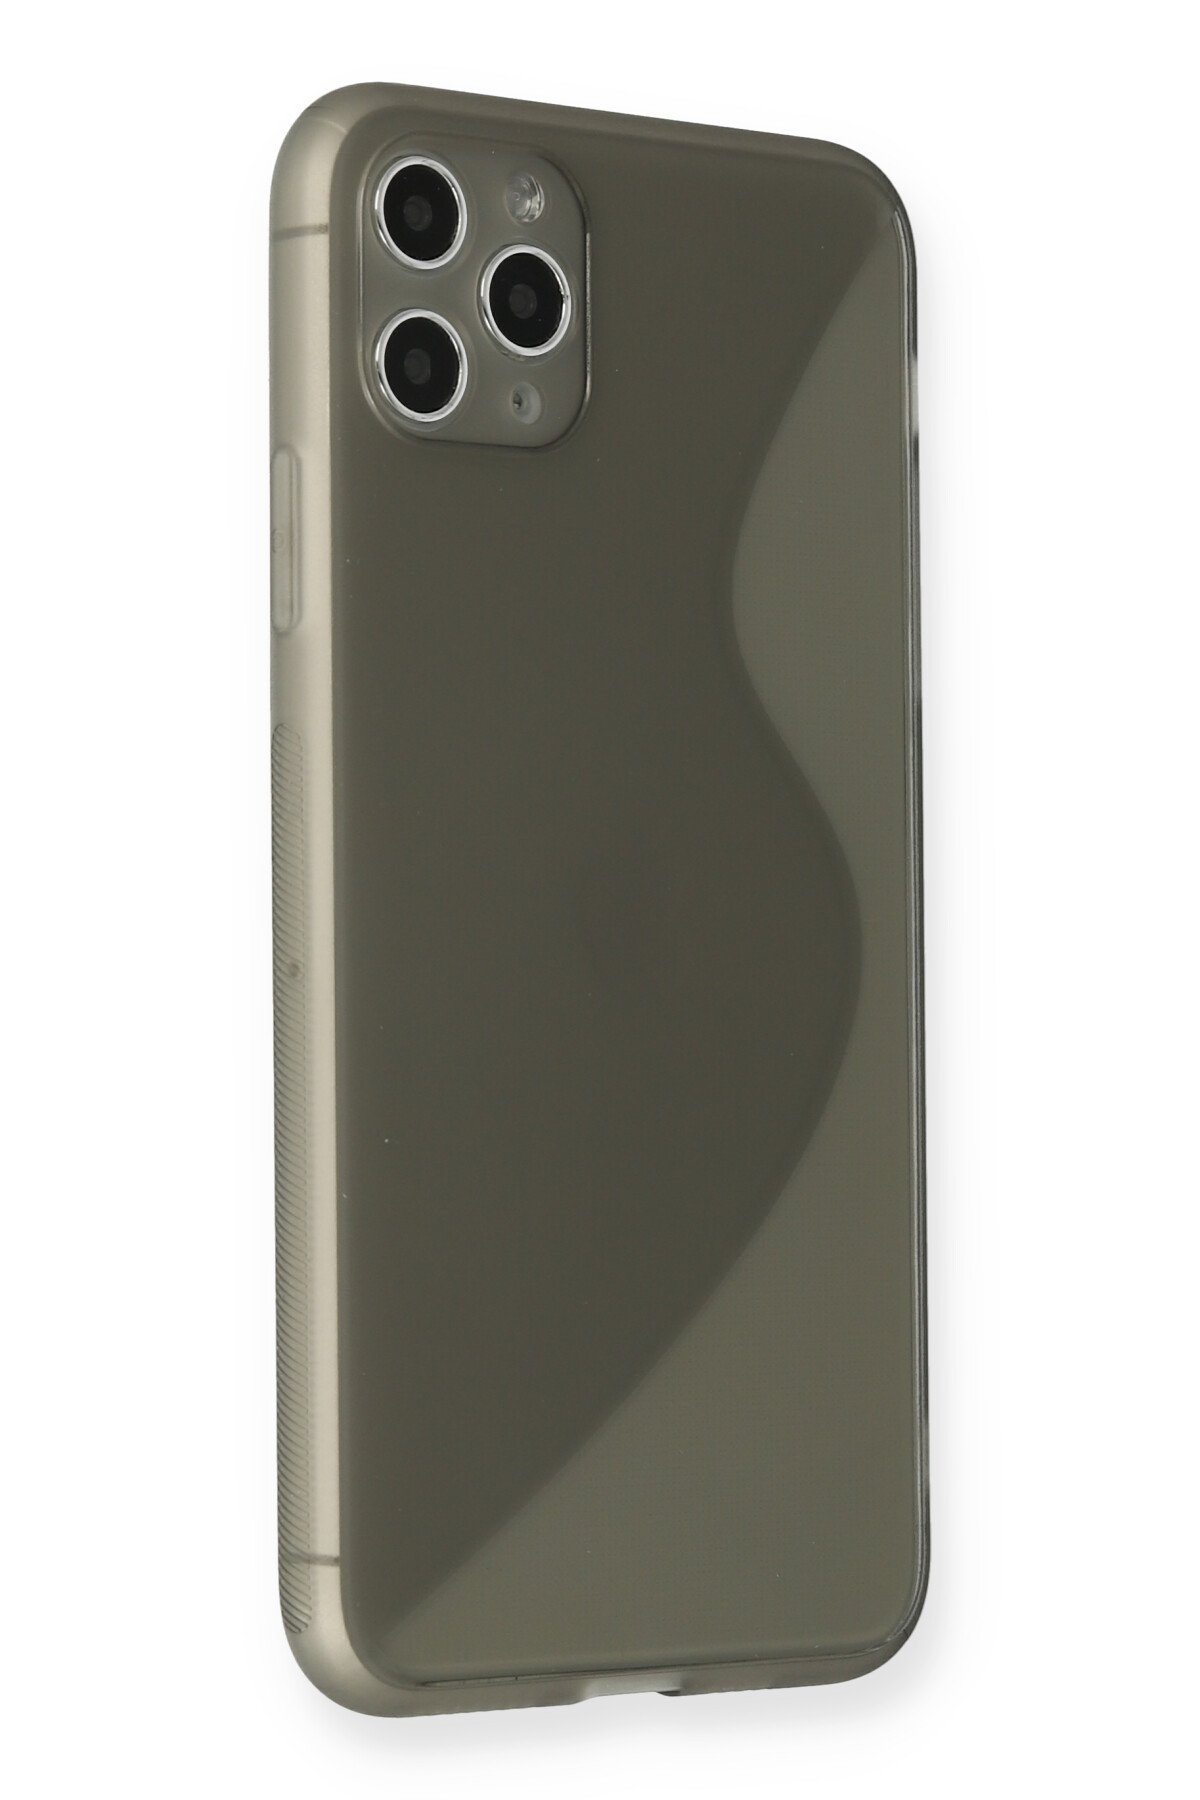 Newface iPhone 11 Pro Max Kılıf Montreal Silikon Kapak - Turkuaz